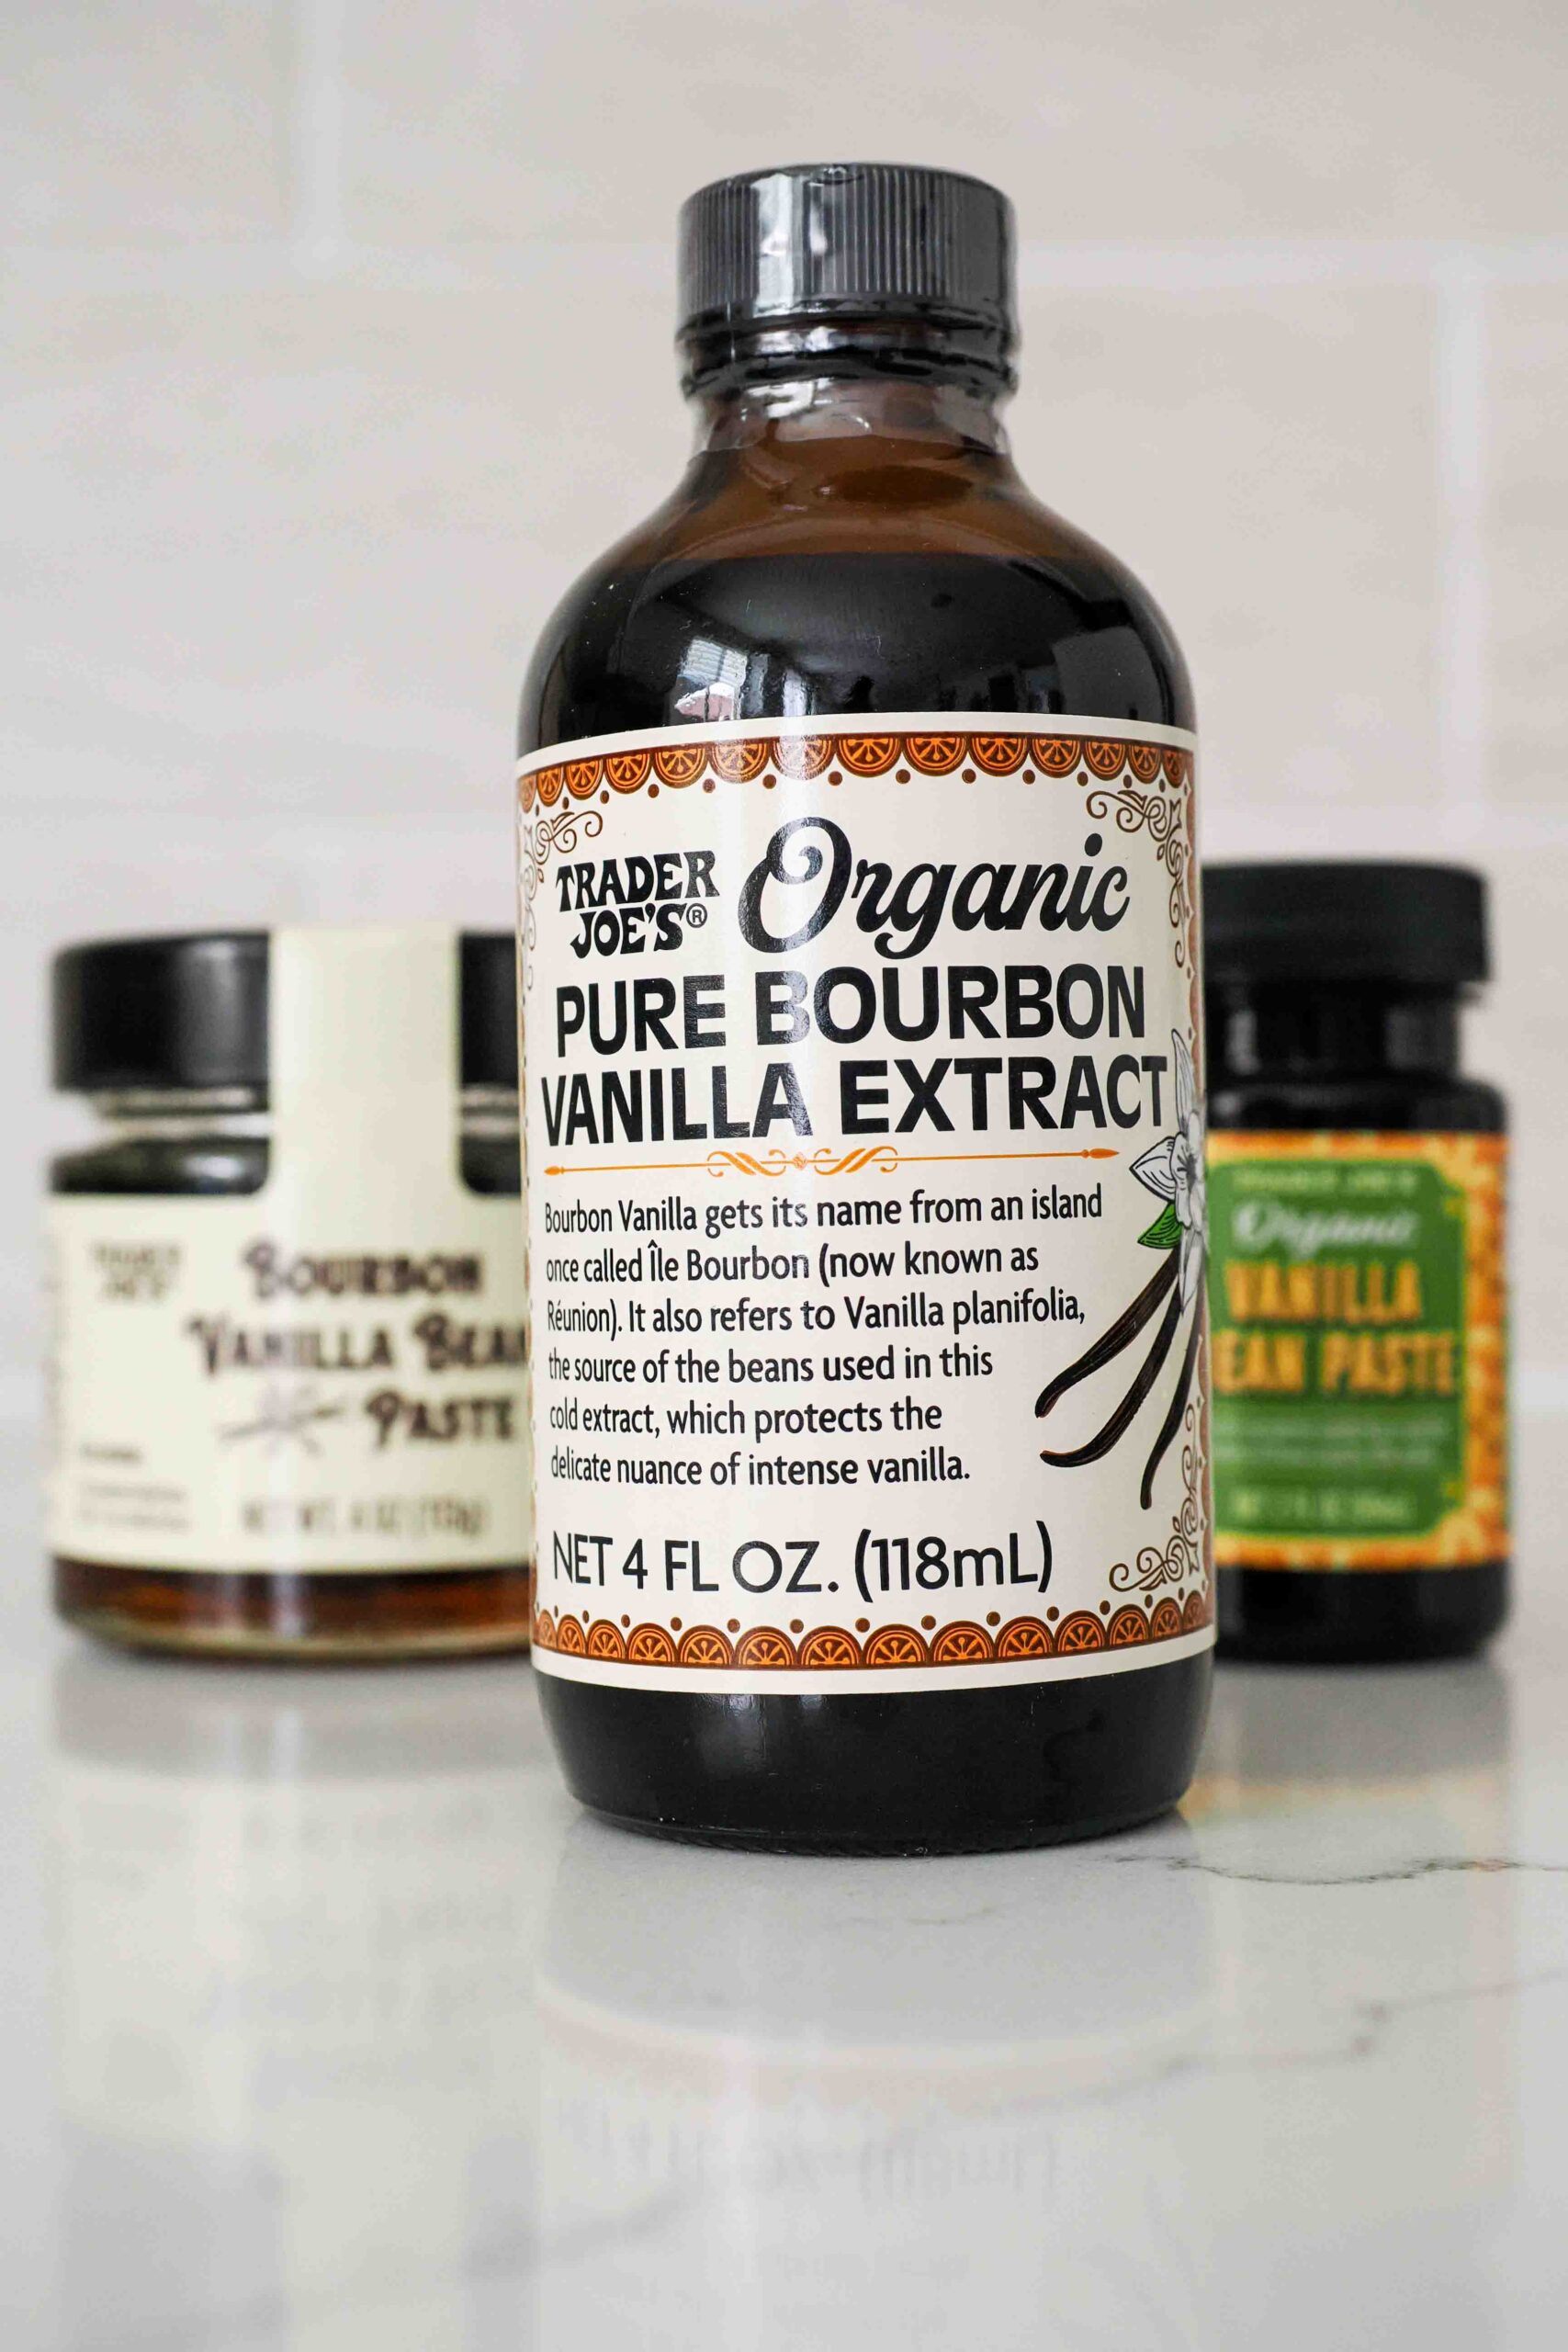 An unopened bottle of Trader Joe's Organic Pure Bourbon Vanilla Extract.